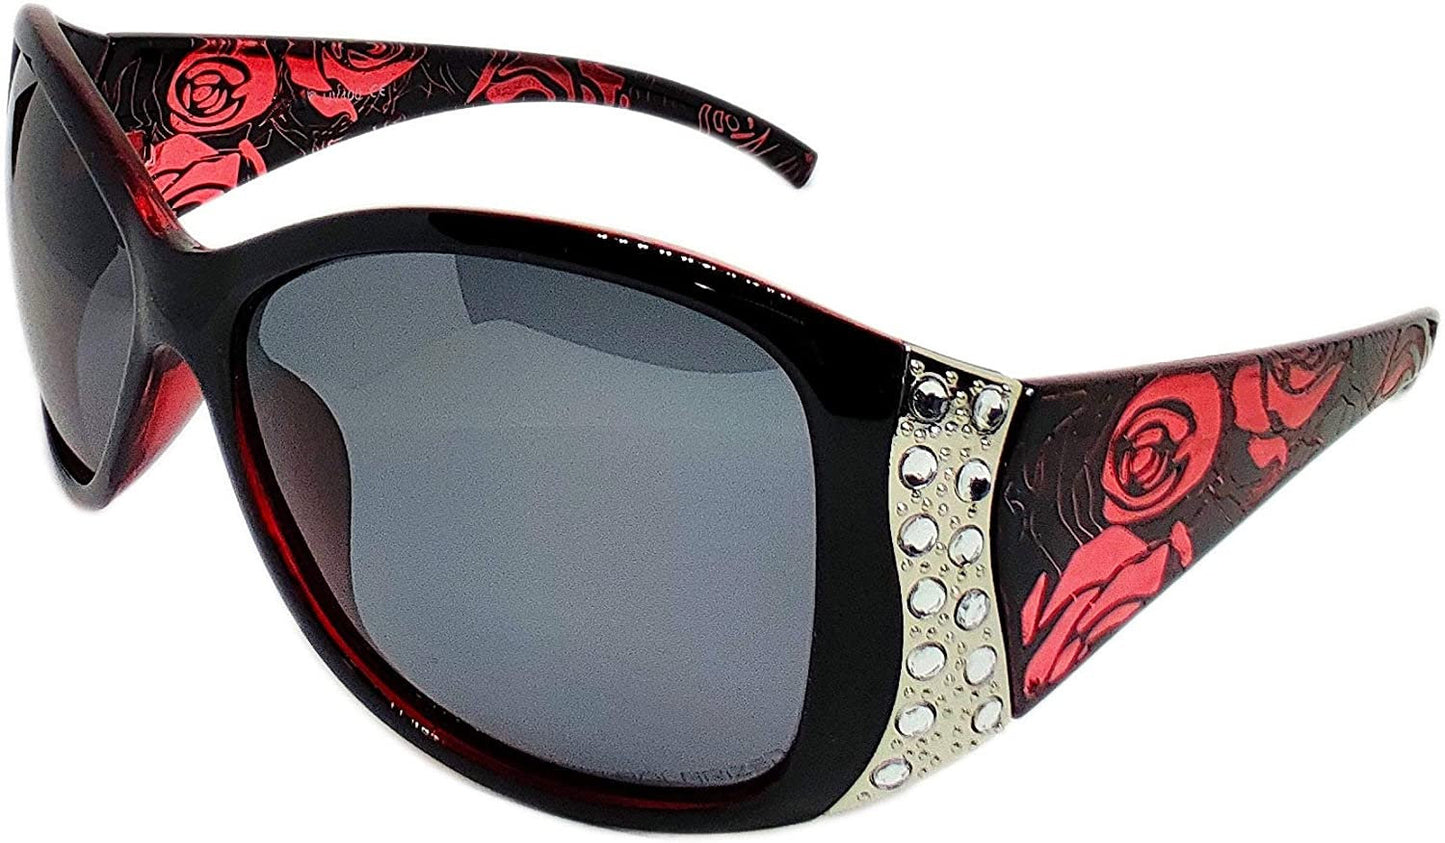 Main image: Polarized Sunglasses for Women - Premium Fashion Sunglasses - HZ Series Lule Womens Designer Sunglasses